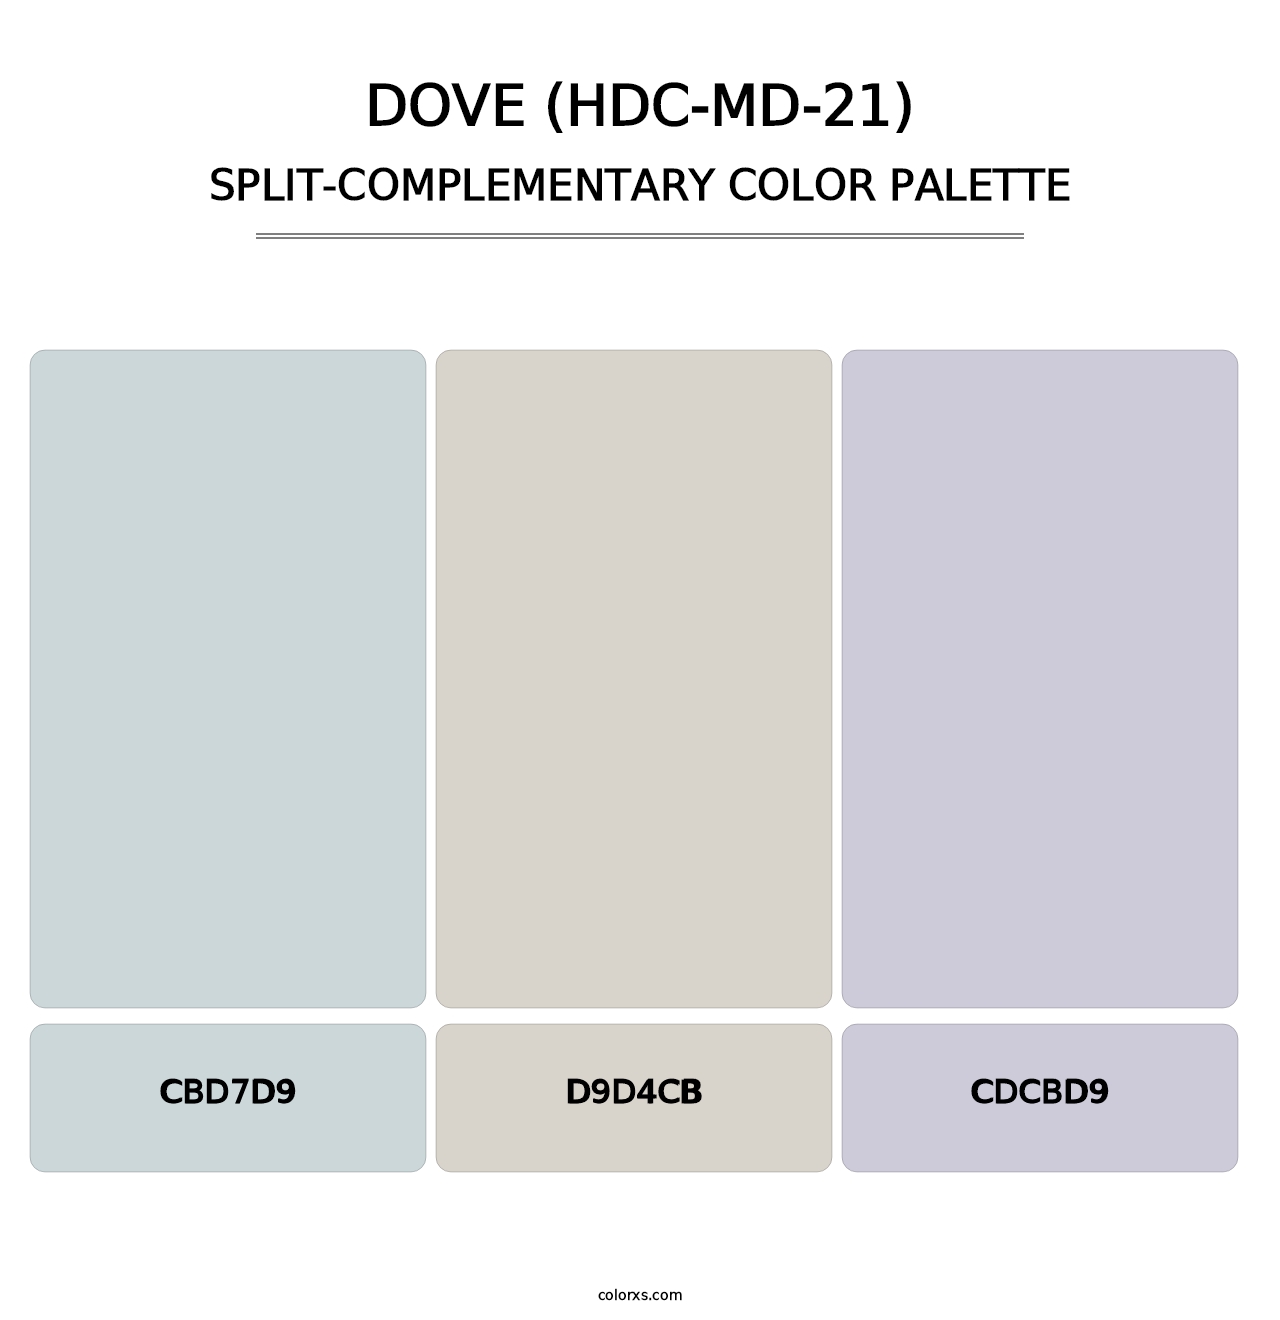 Dove (HDC-MD-21) - Split-Complementary Color Palette